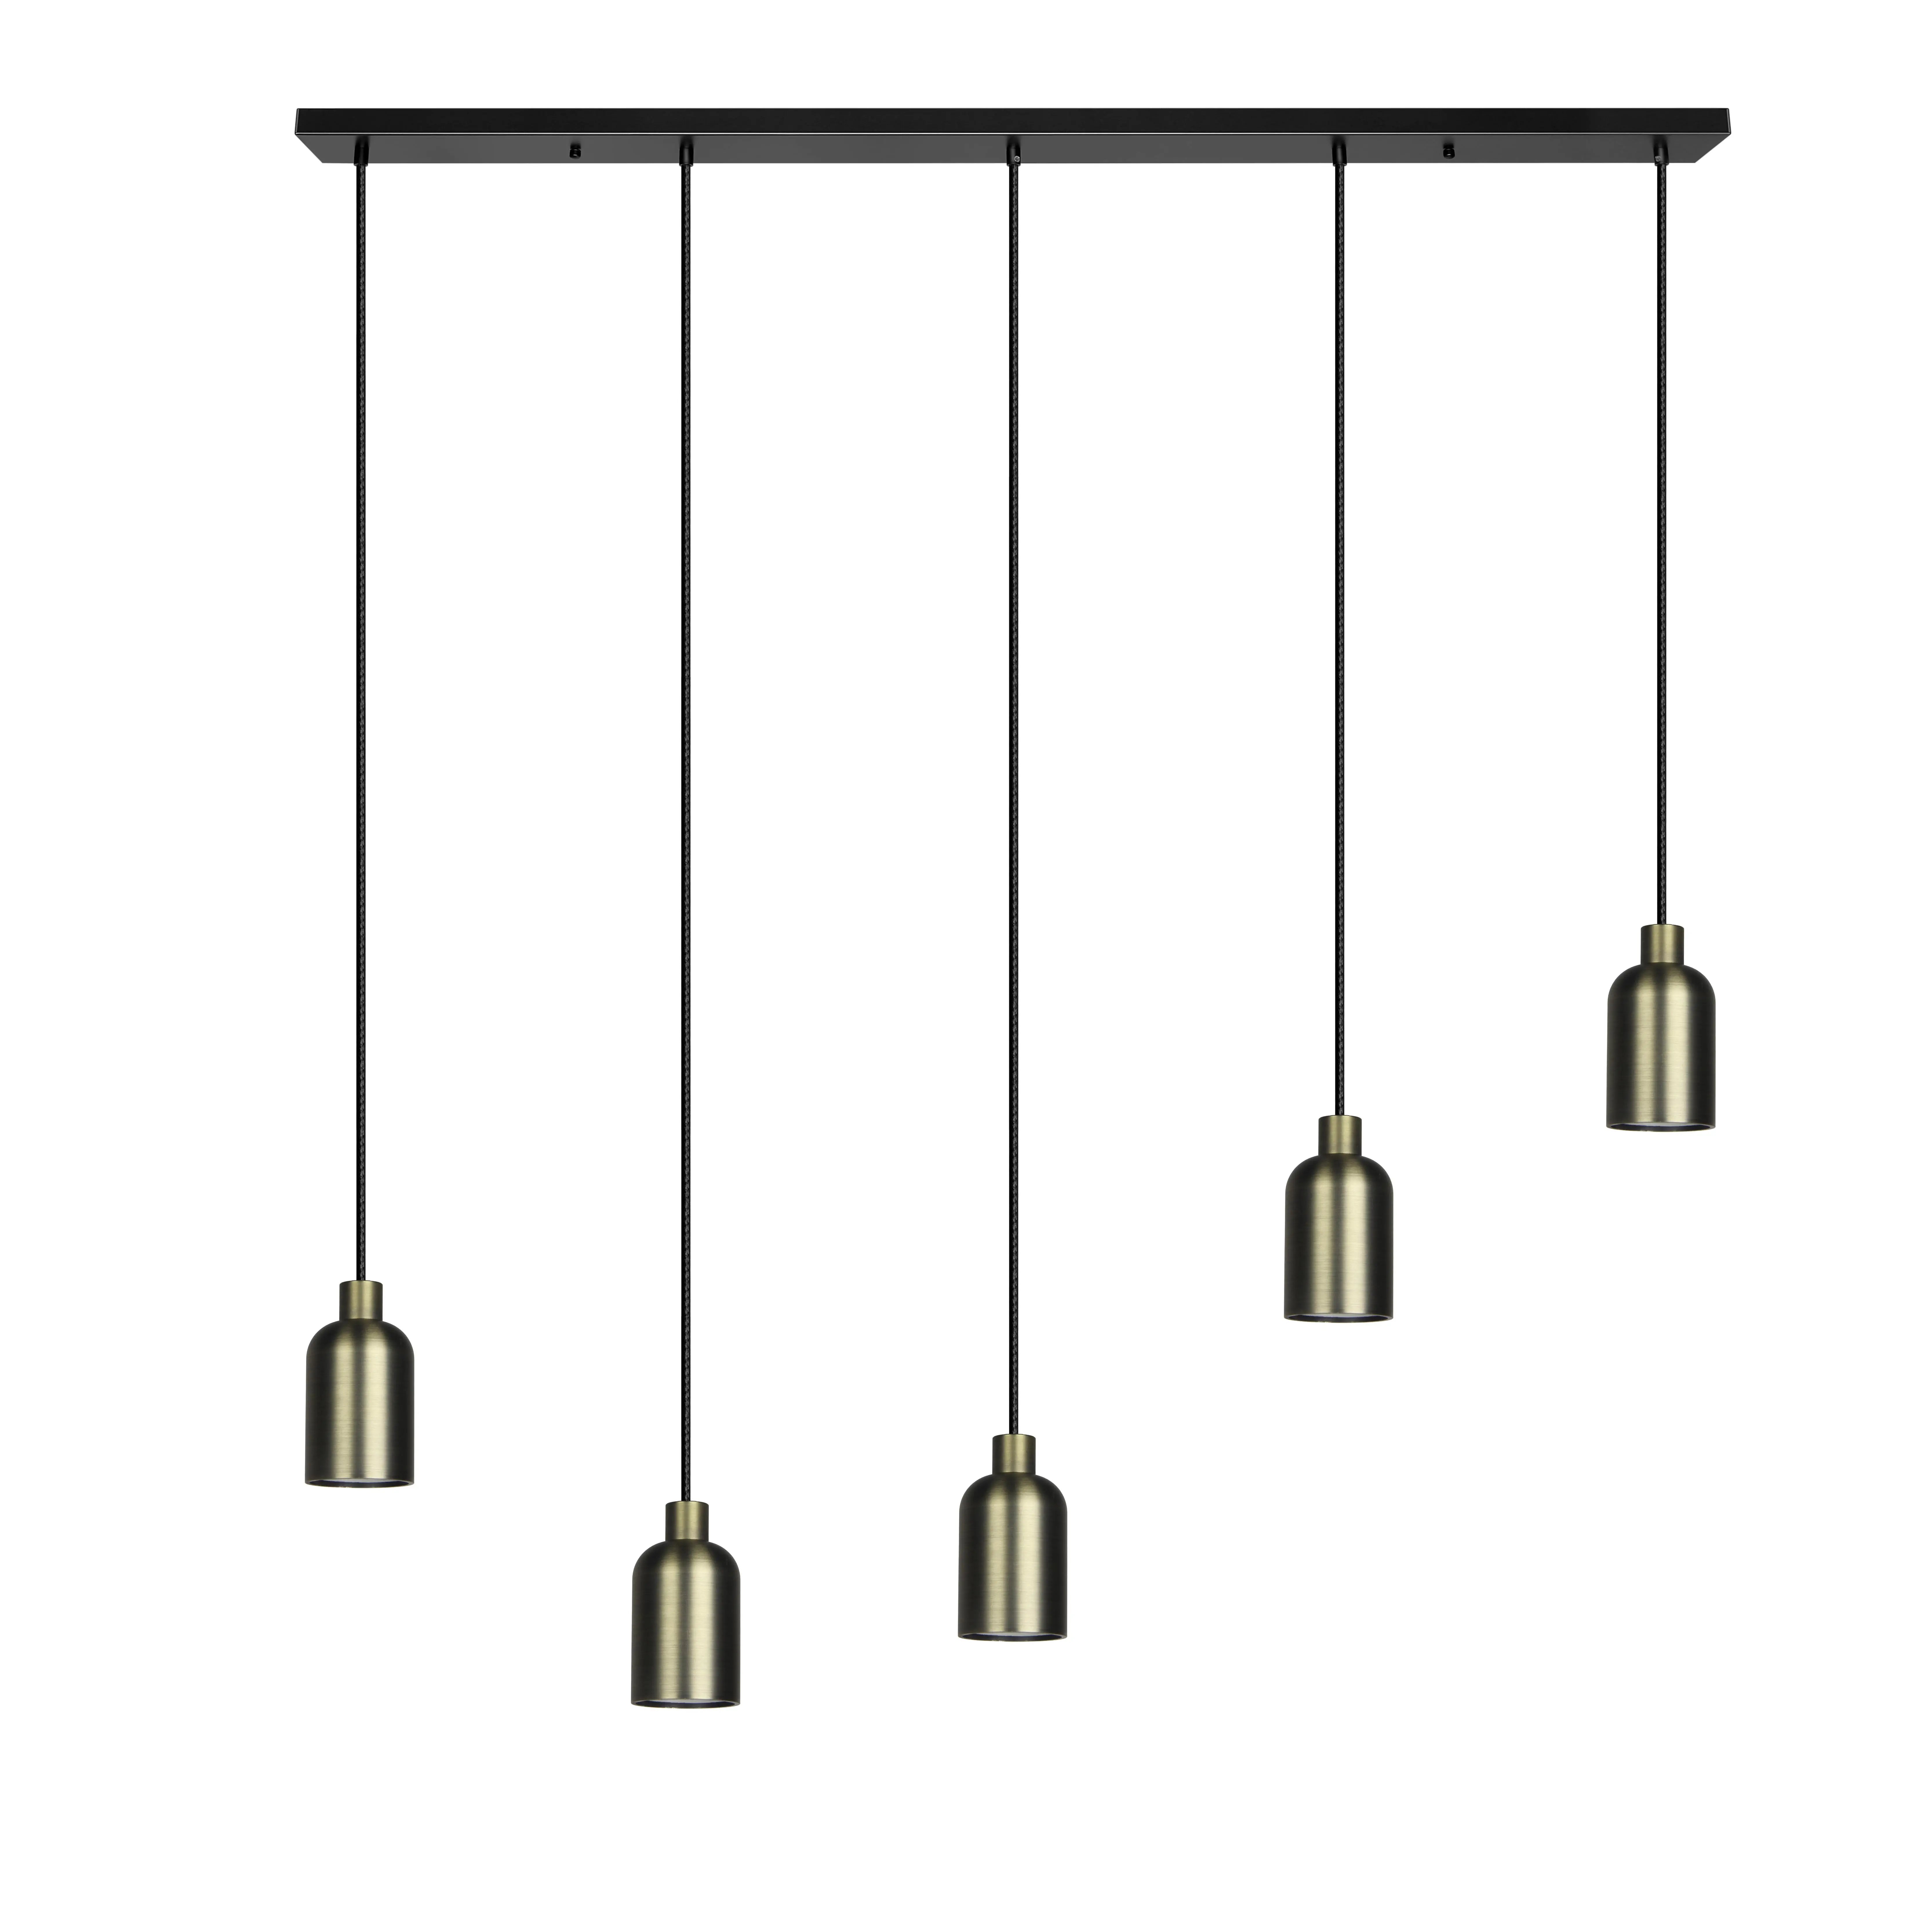 Free Sample E27 Hanging Ceiling Light Bulb Socket Fixture Pendant Lamp Holder With Sucker